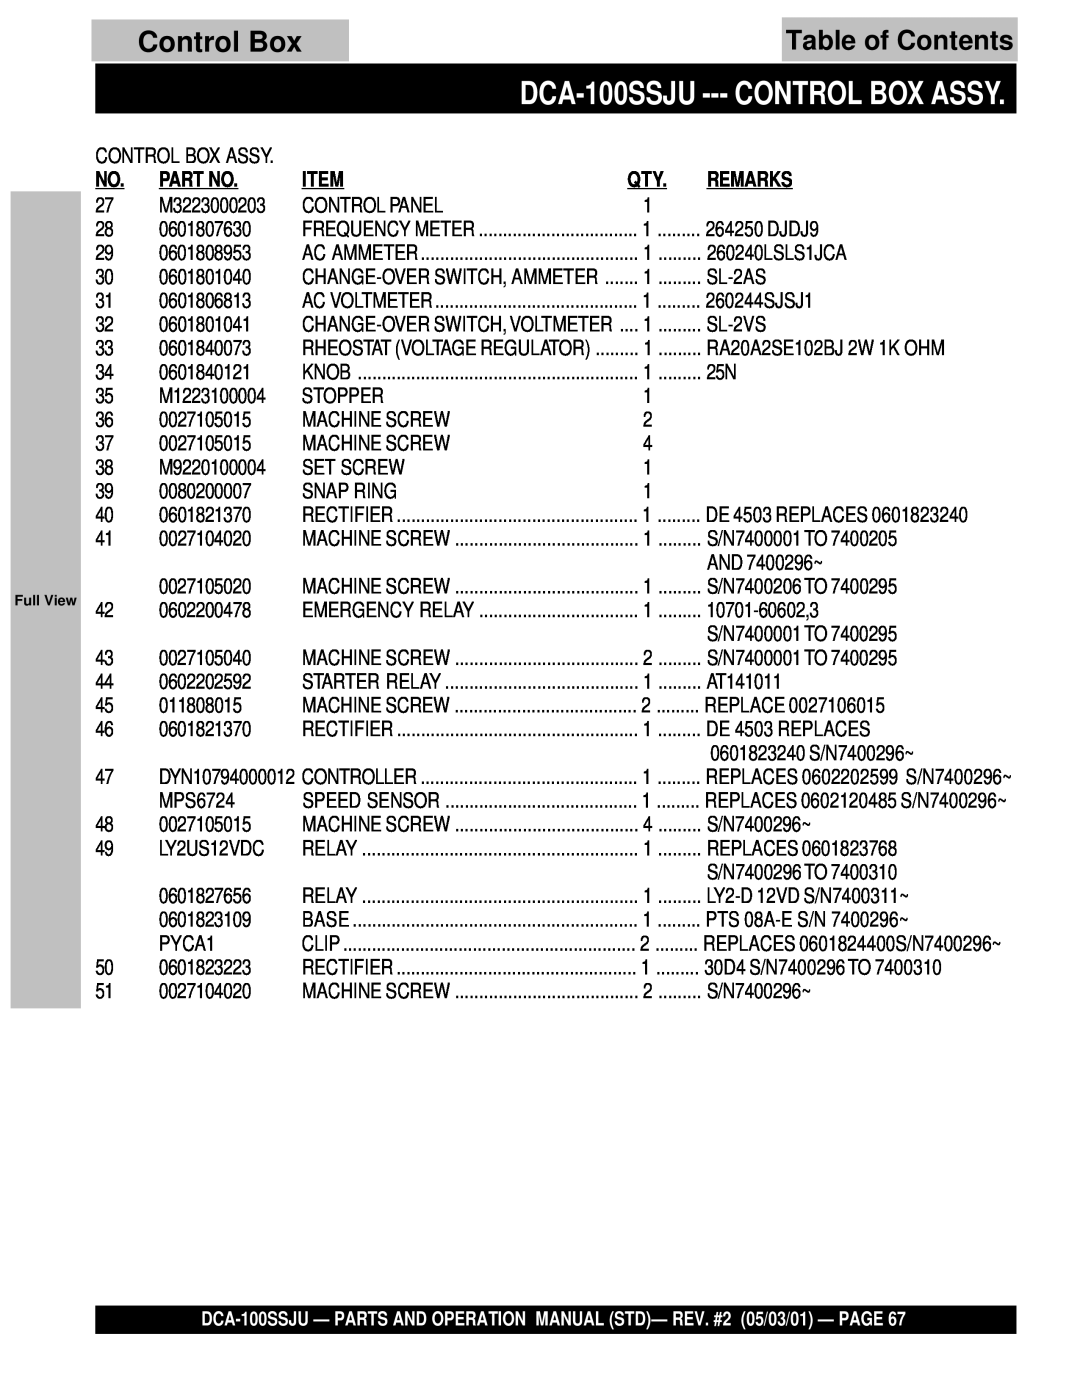 Multiquip DCA-100SSJU operation manual Table of Contents, Control Box Assy 